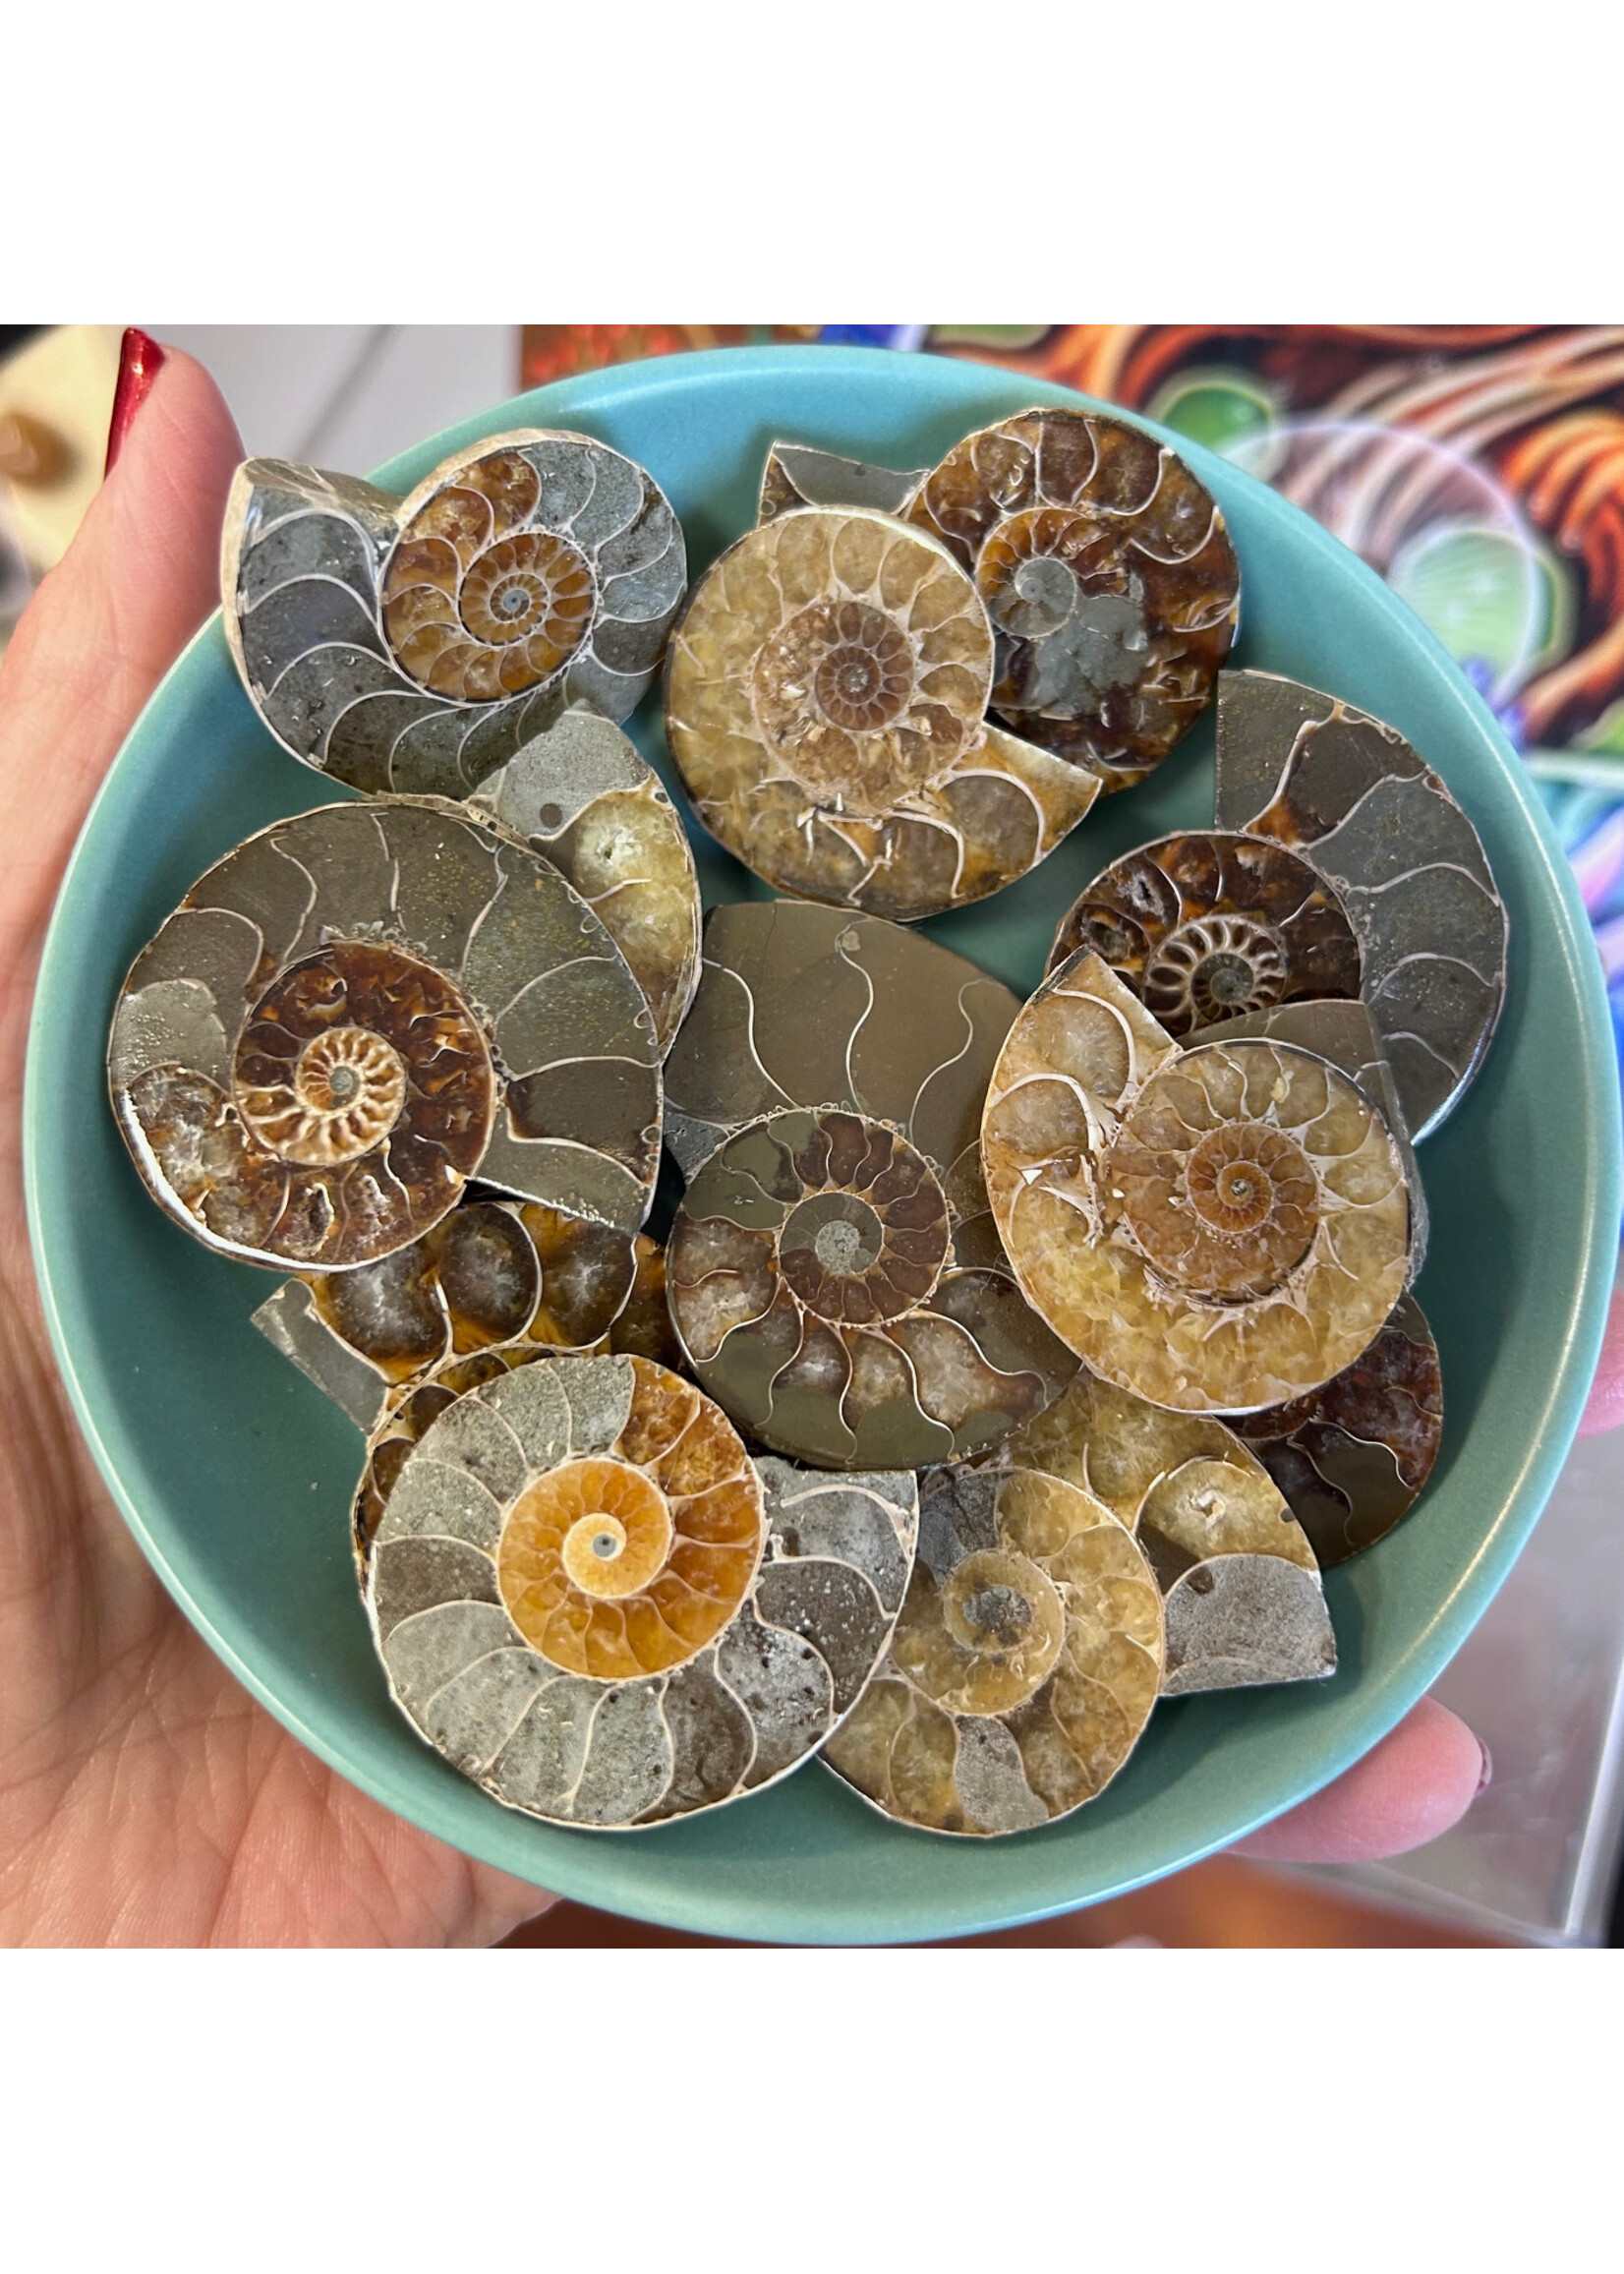 Ammonite for transformation